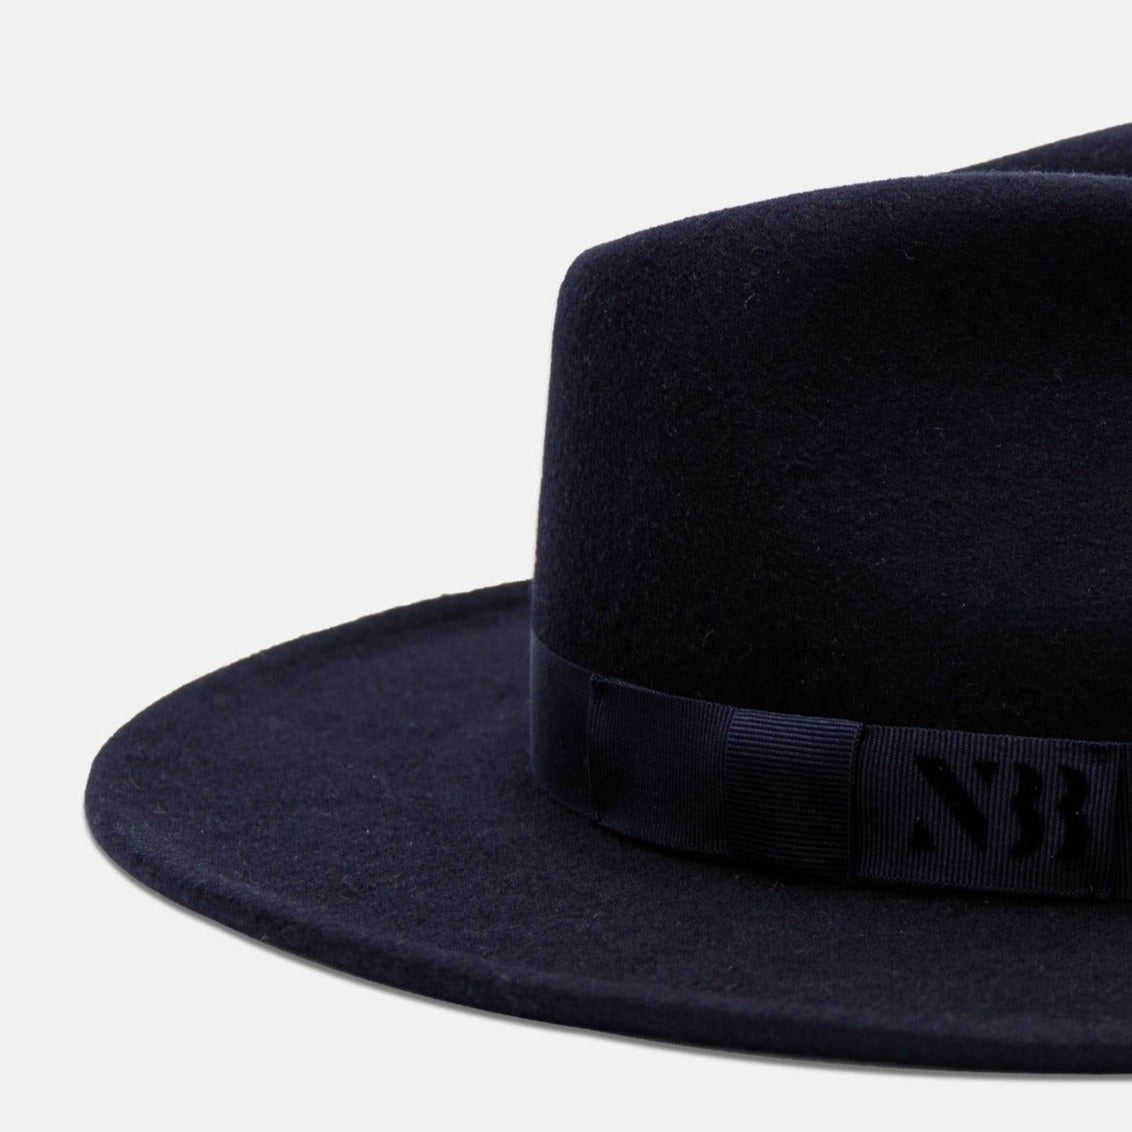 NTHIRTYTHREE - N33 - Fedora Felt Hat - Signature Midnight Blue - handmade in Europe